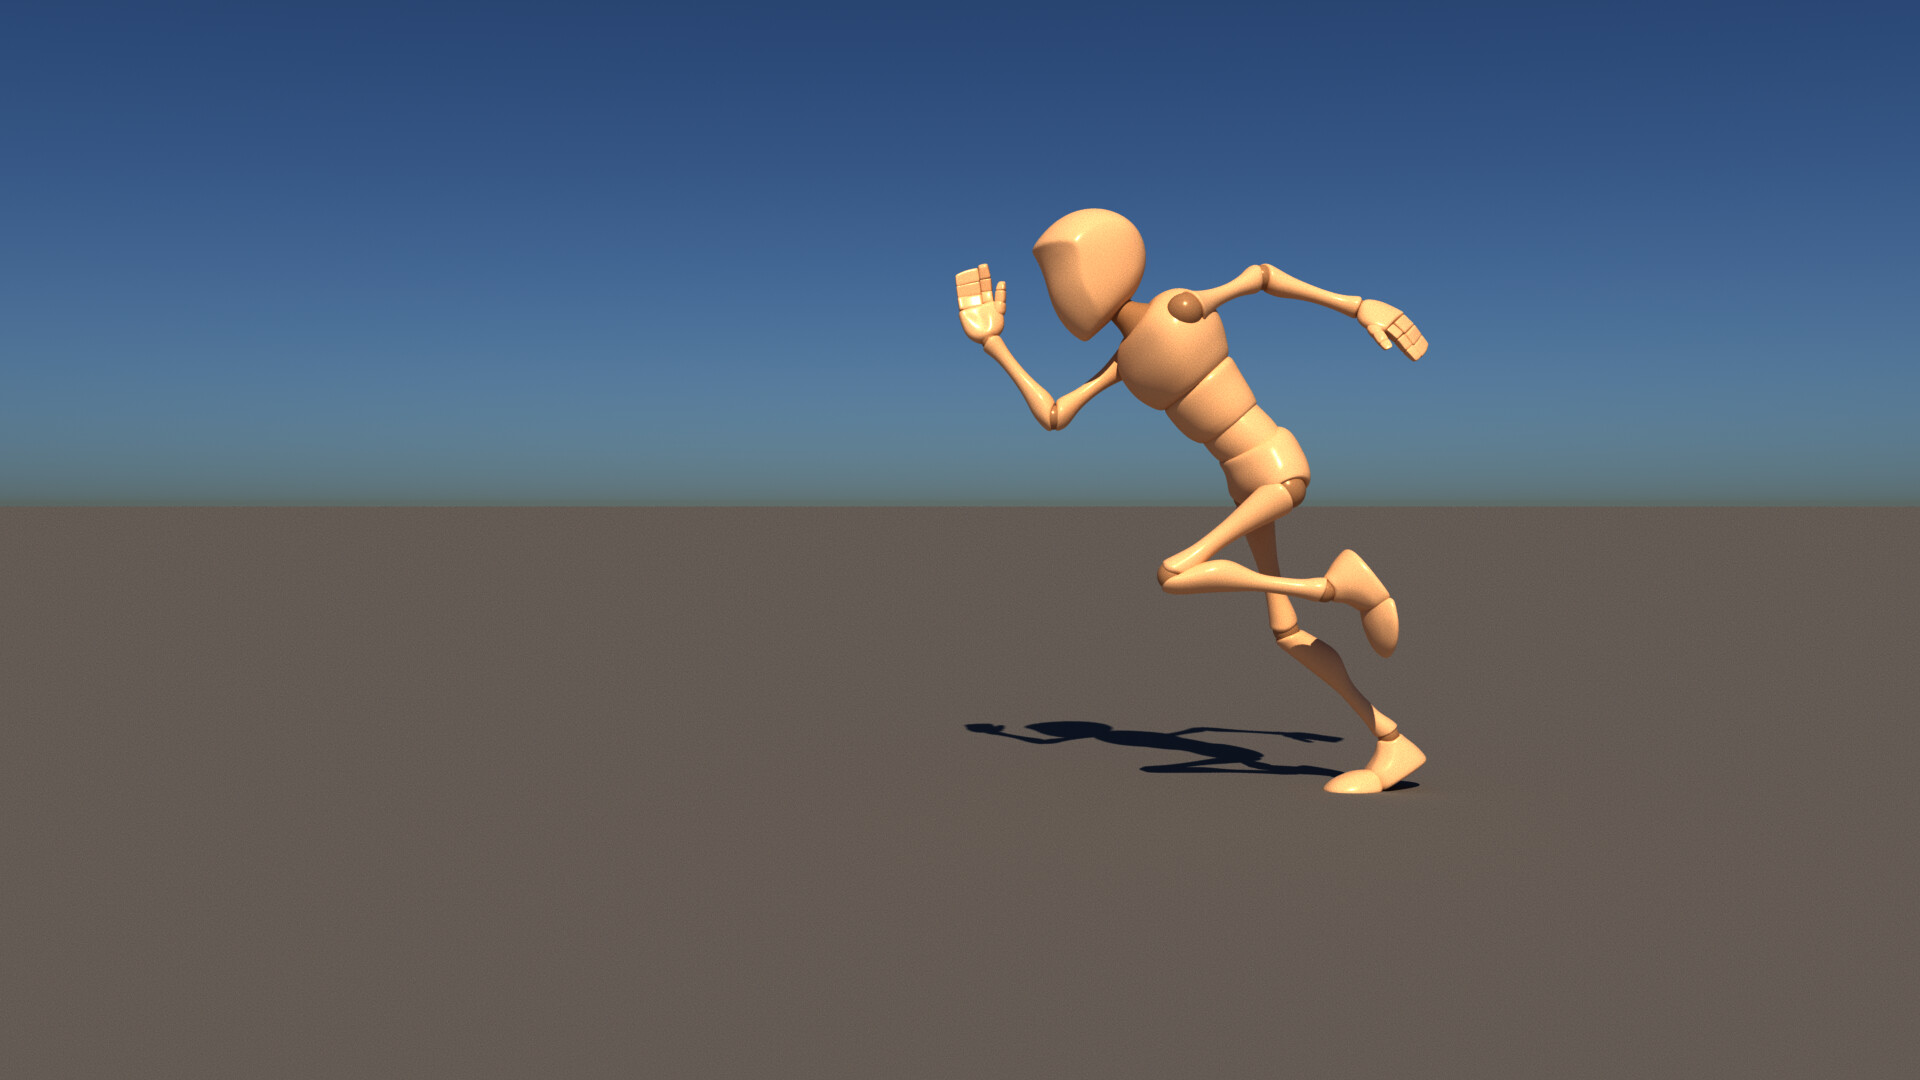 Advanced Male Humanoid Robot Running Pose 3D Model $169 - .gltf .obj .ma  .max .upk .unitypackage .c4d .fbx .usdz .3ds .blend .lxo - Free3D